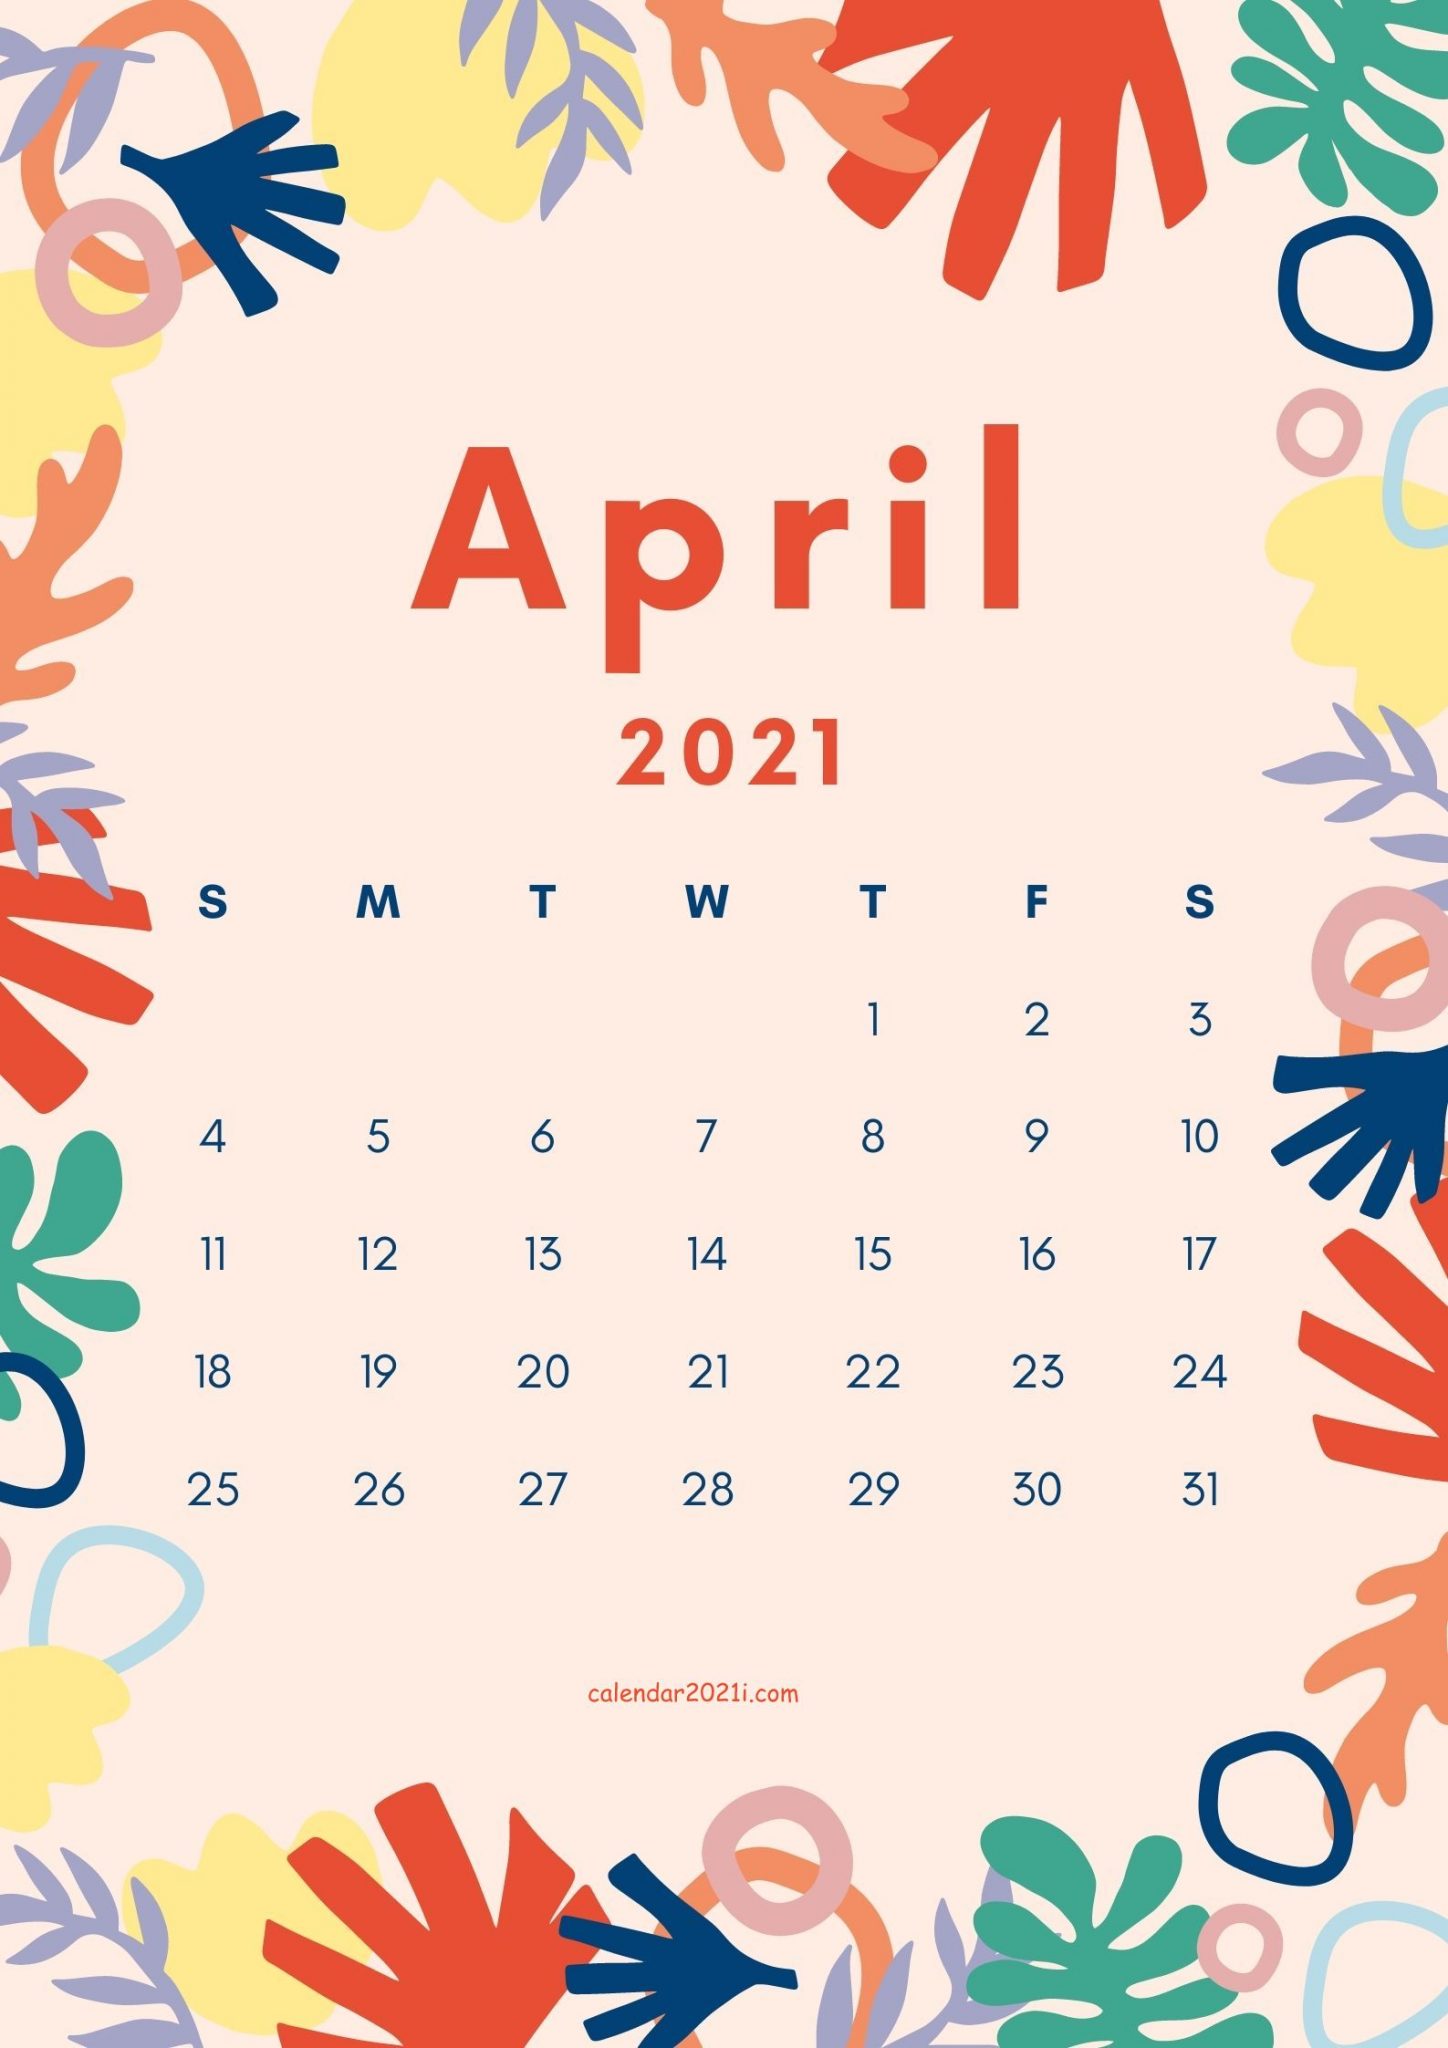 April 2021 Cute Calendar Design